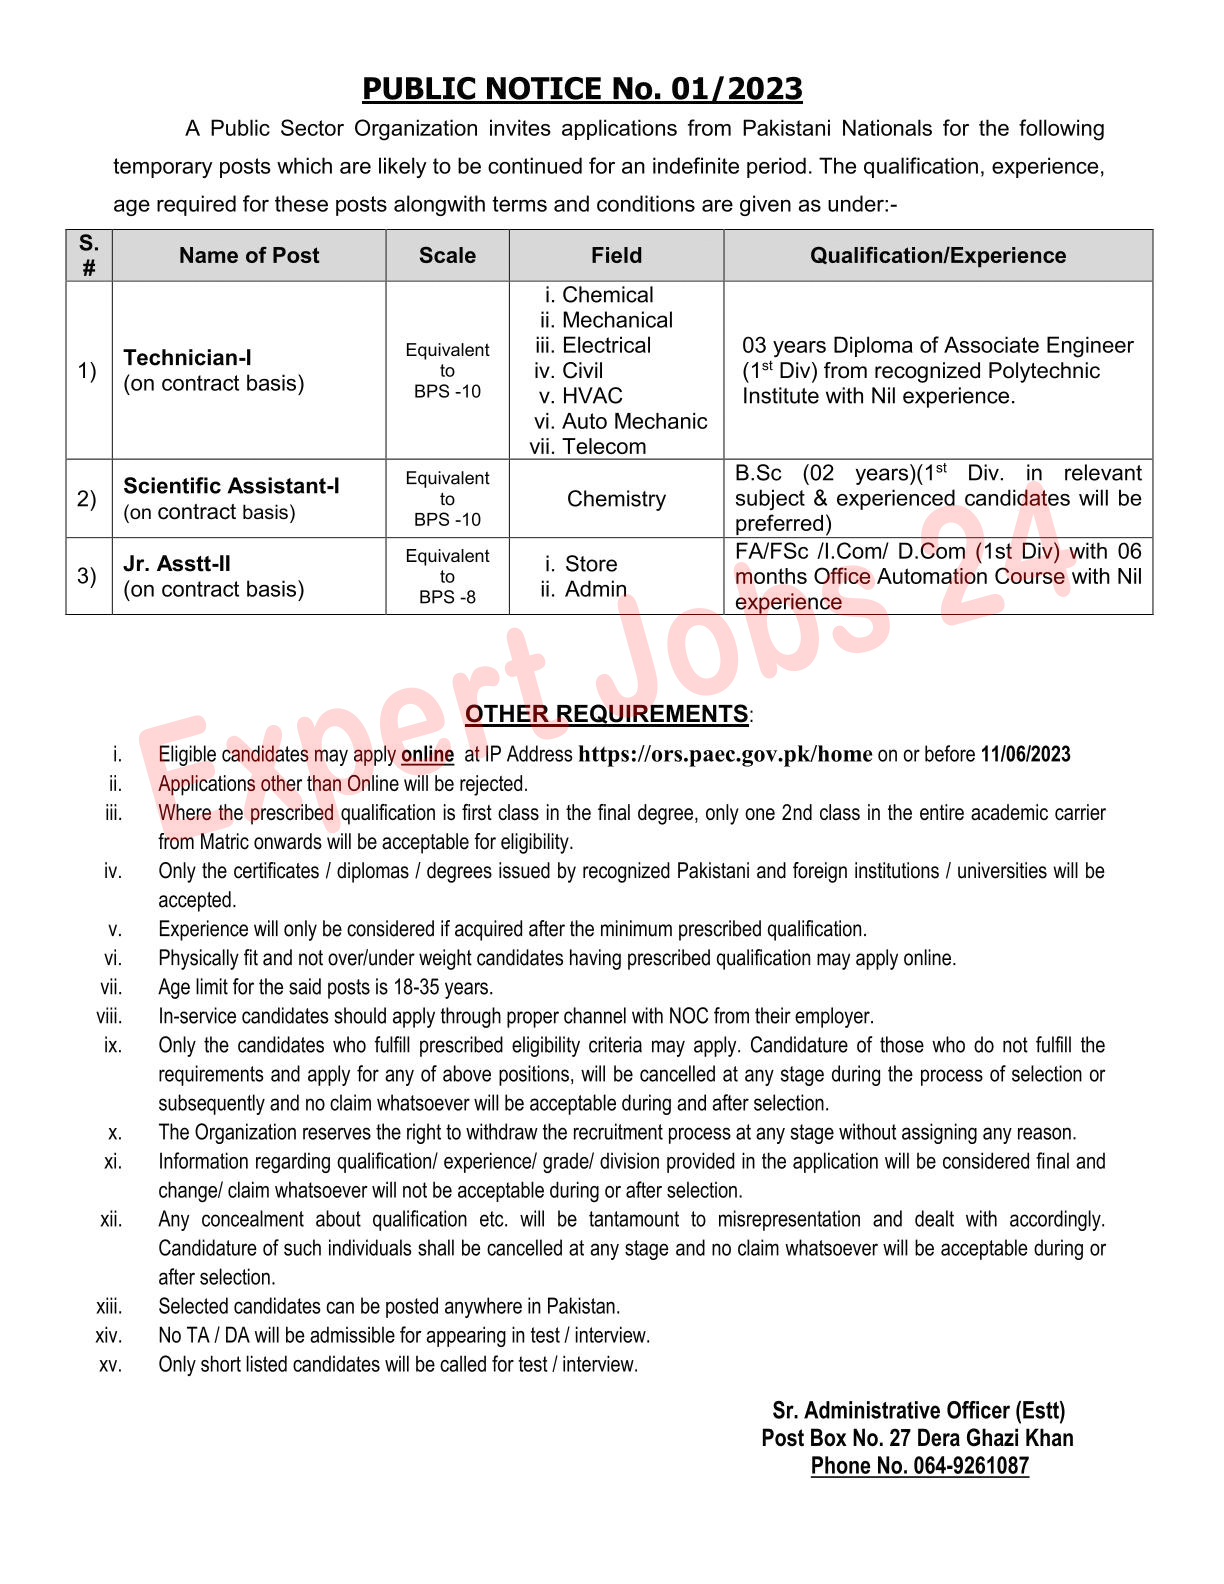 Pakistan Atomic Energy Jobs ors.paec.gov.pk recruitment 2023